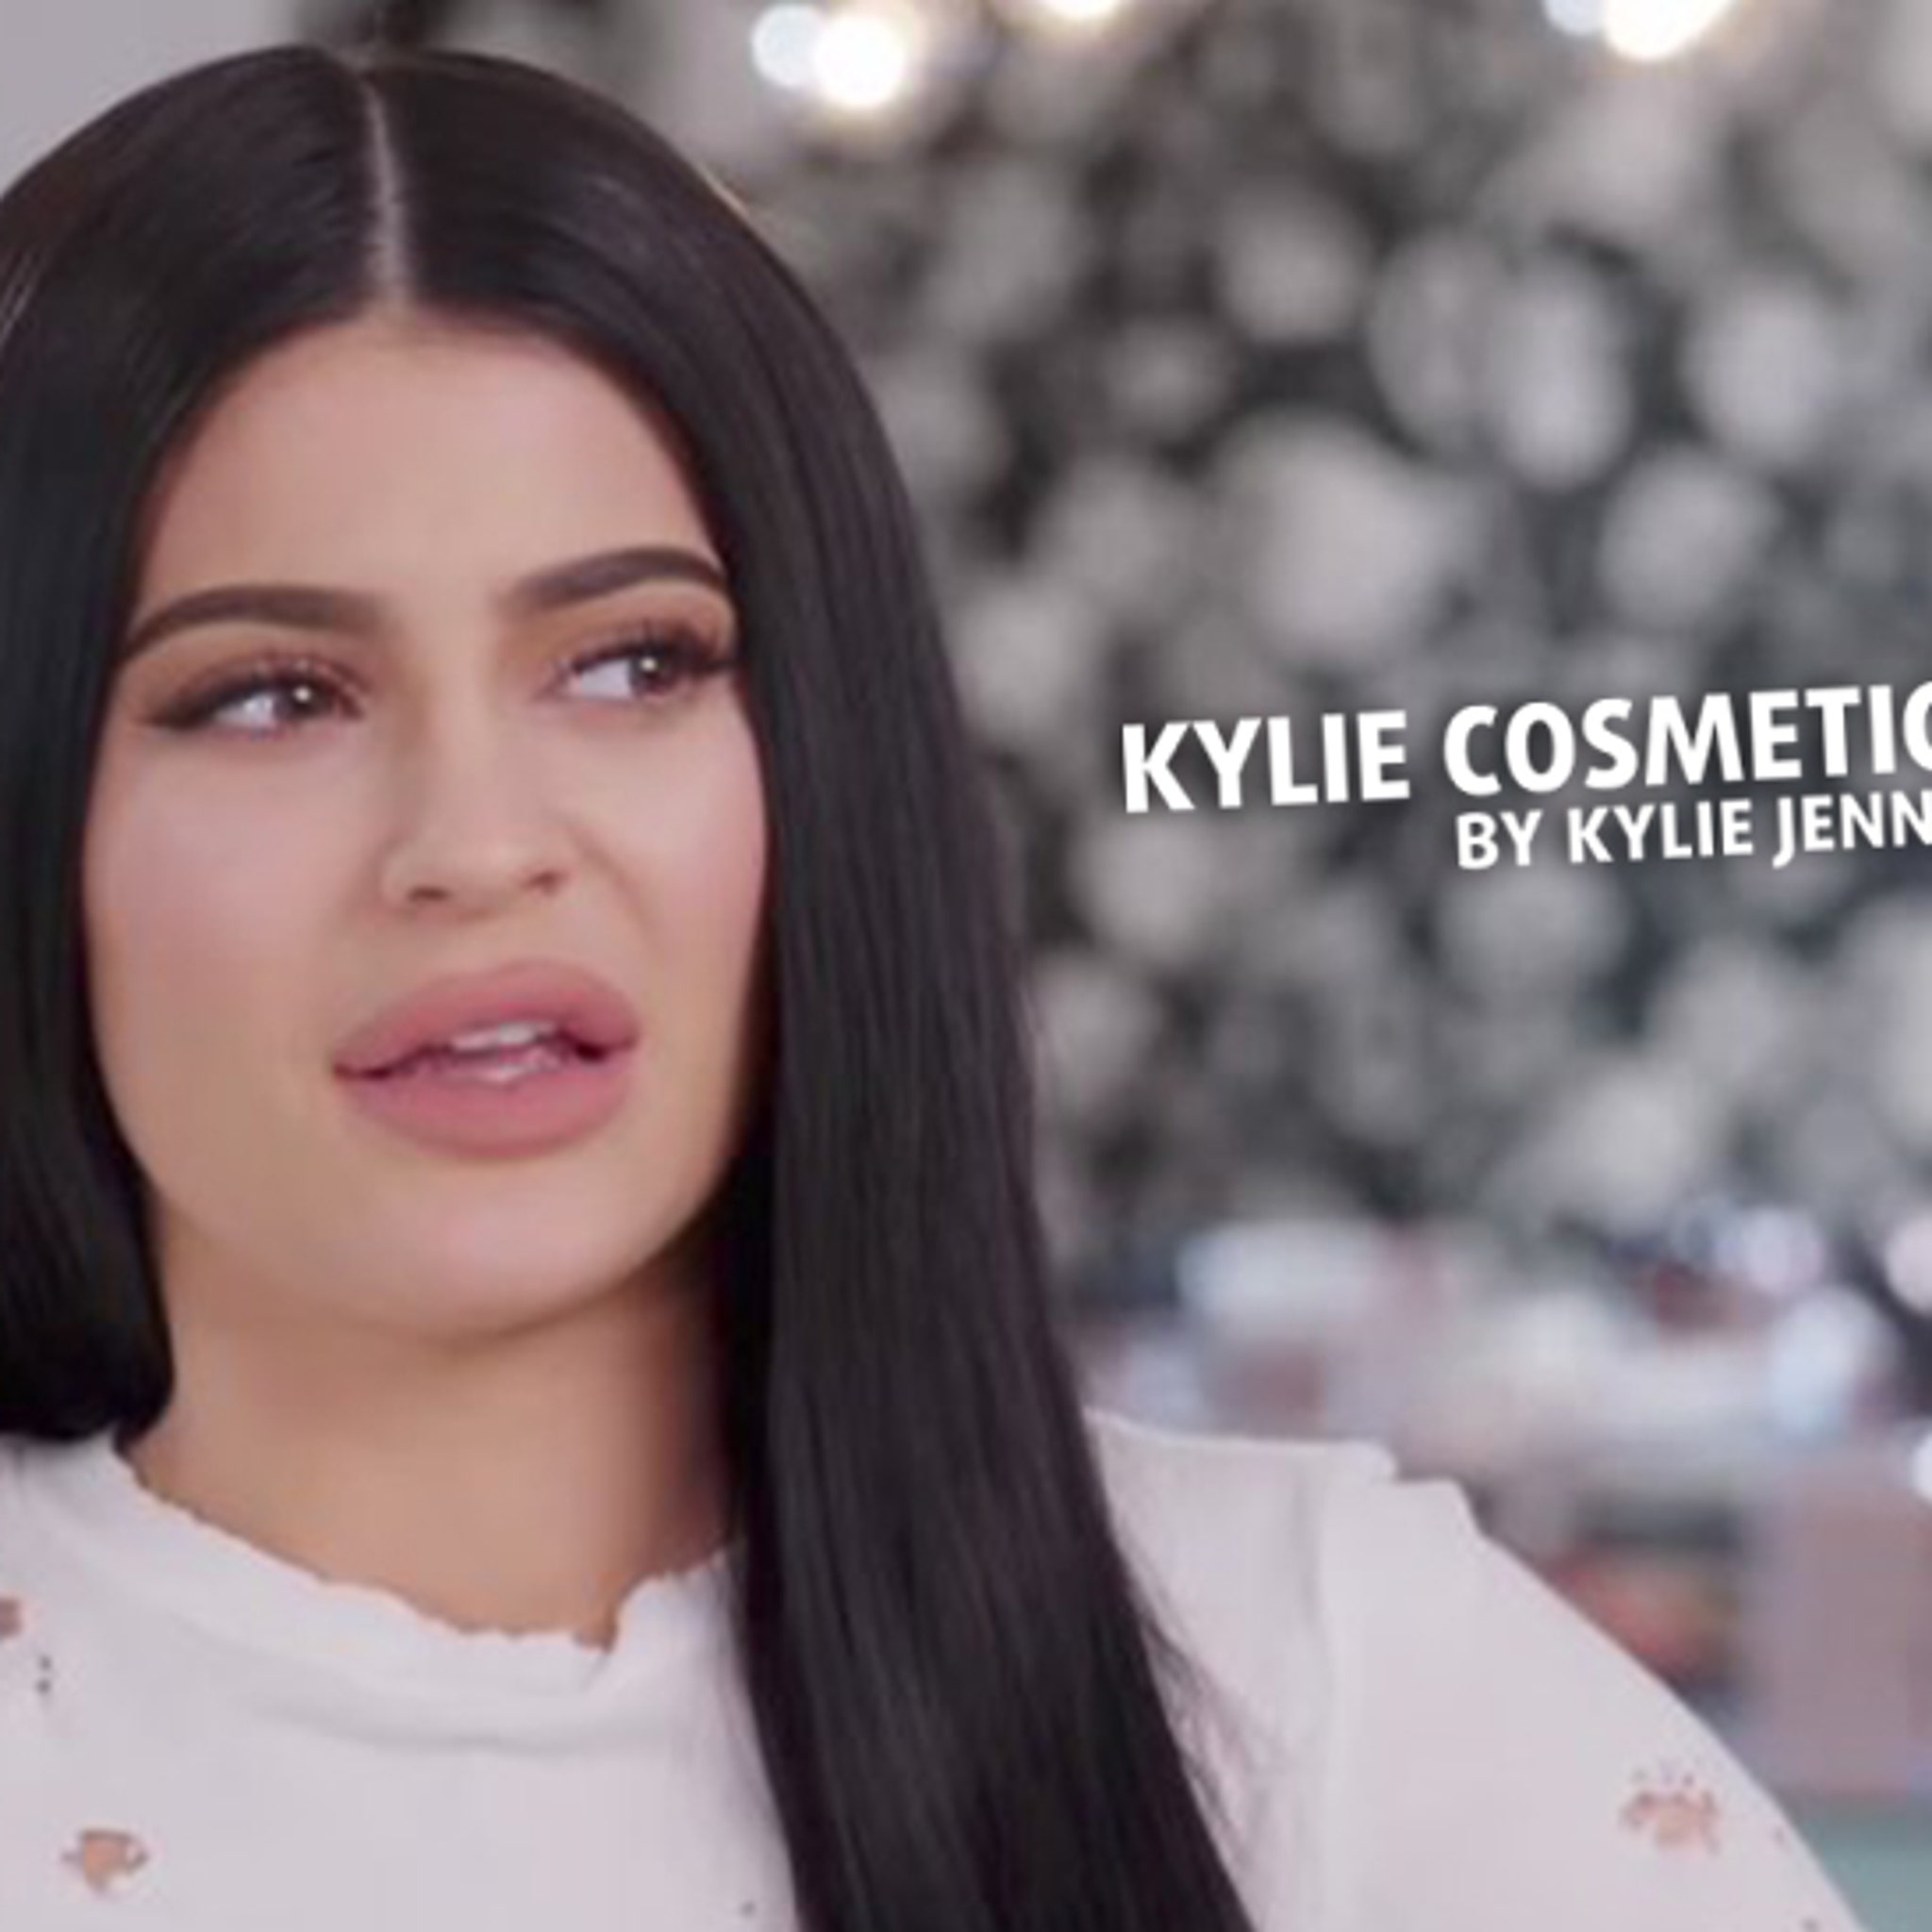 Is Kylie Cosmetics losing popularity?